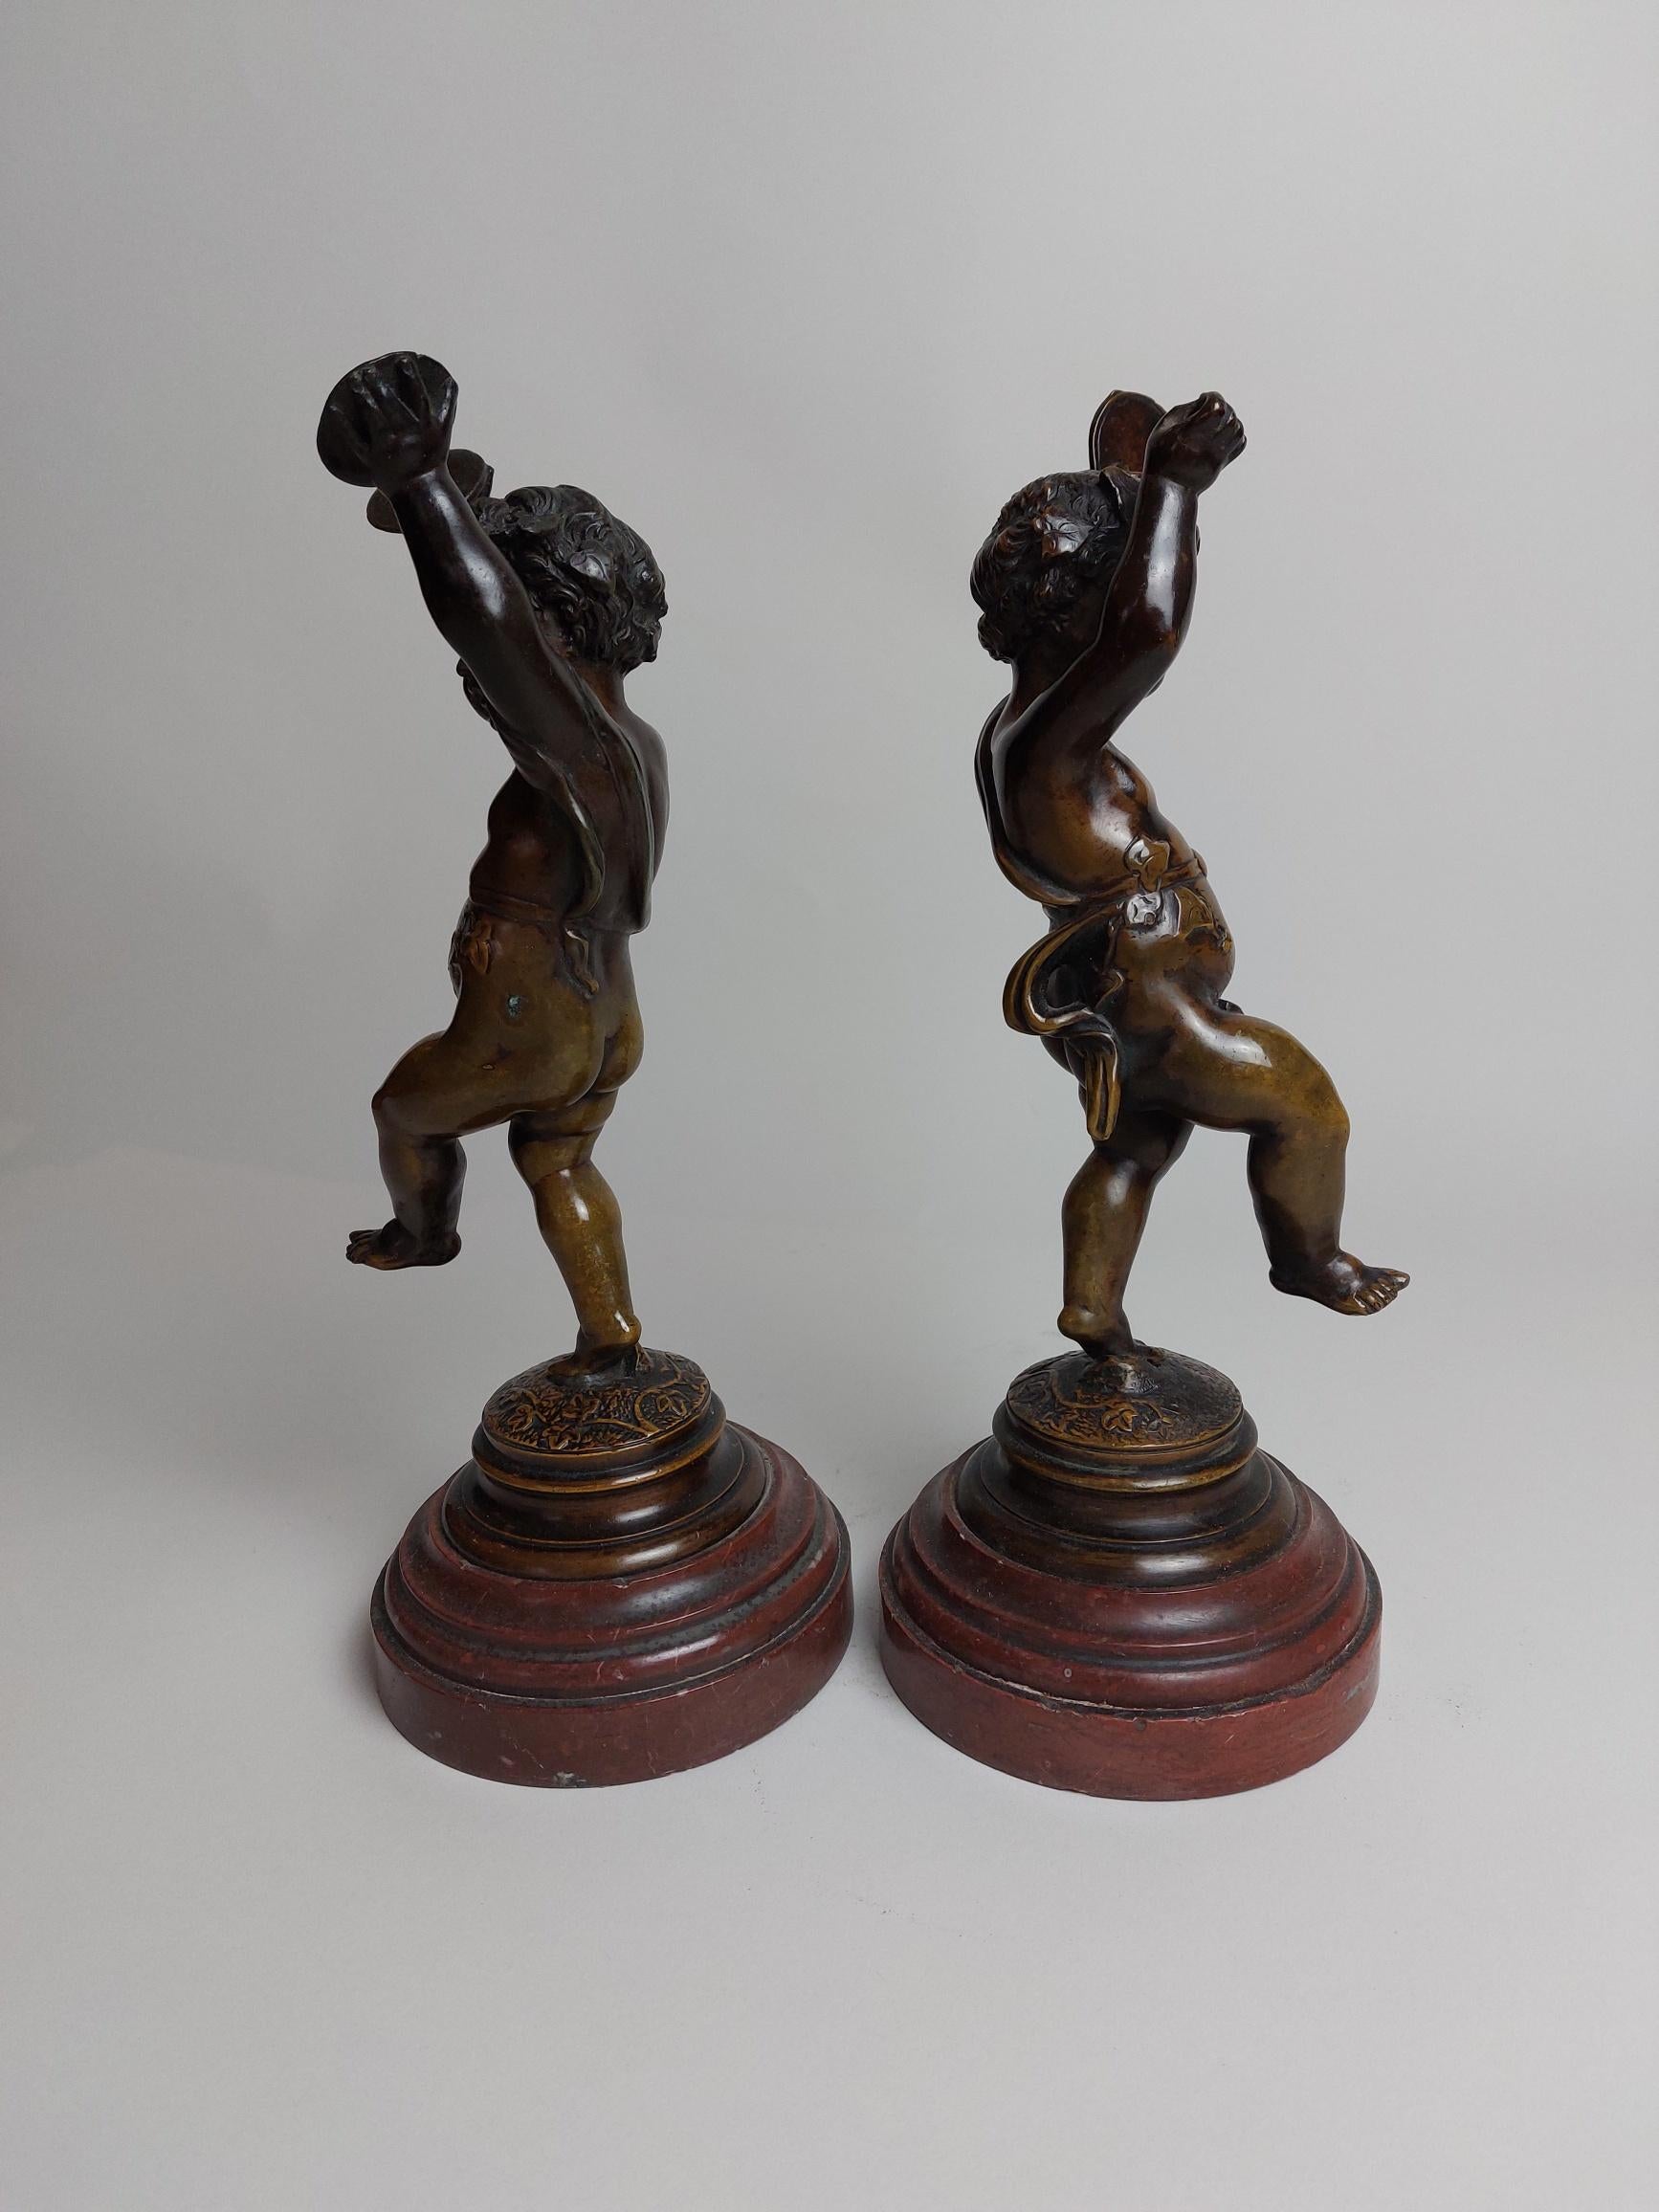 Baroque Revival Joyful Pair of 19th Century Bronze Cherubs 'Putti' Dancing For Sale